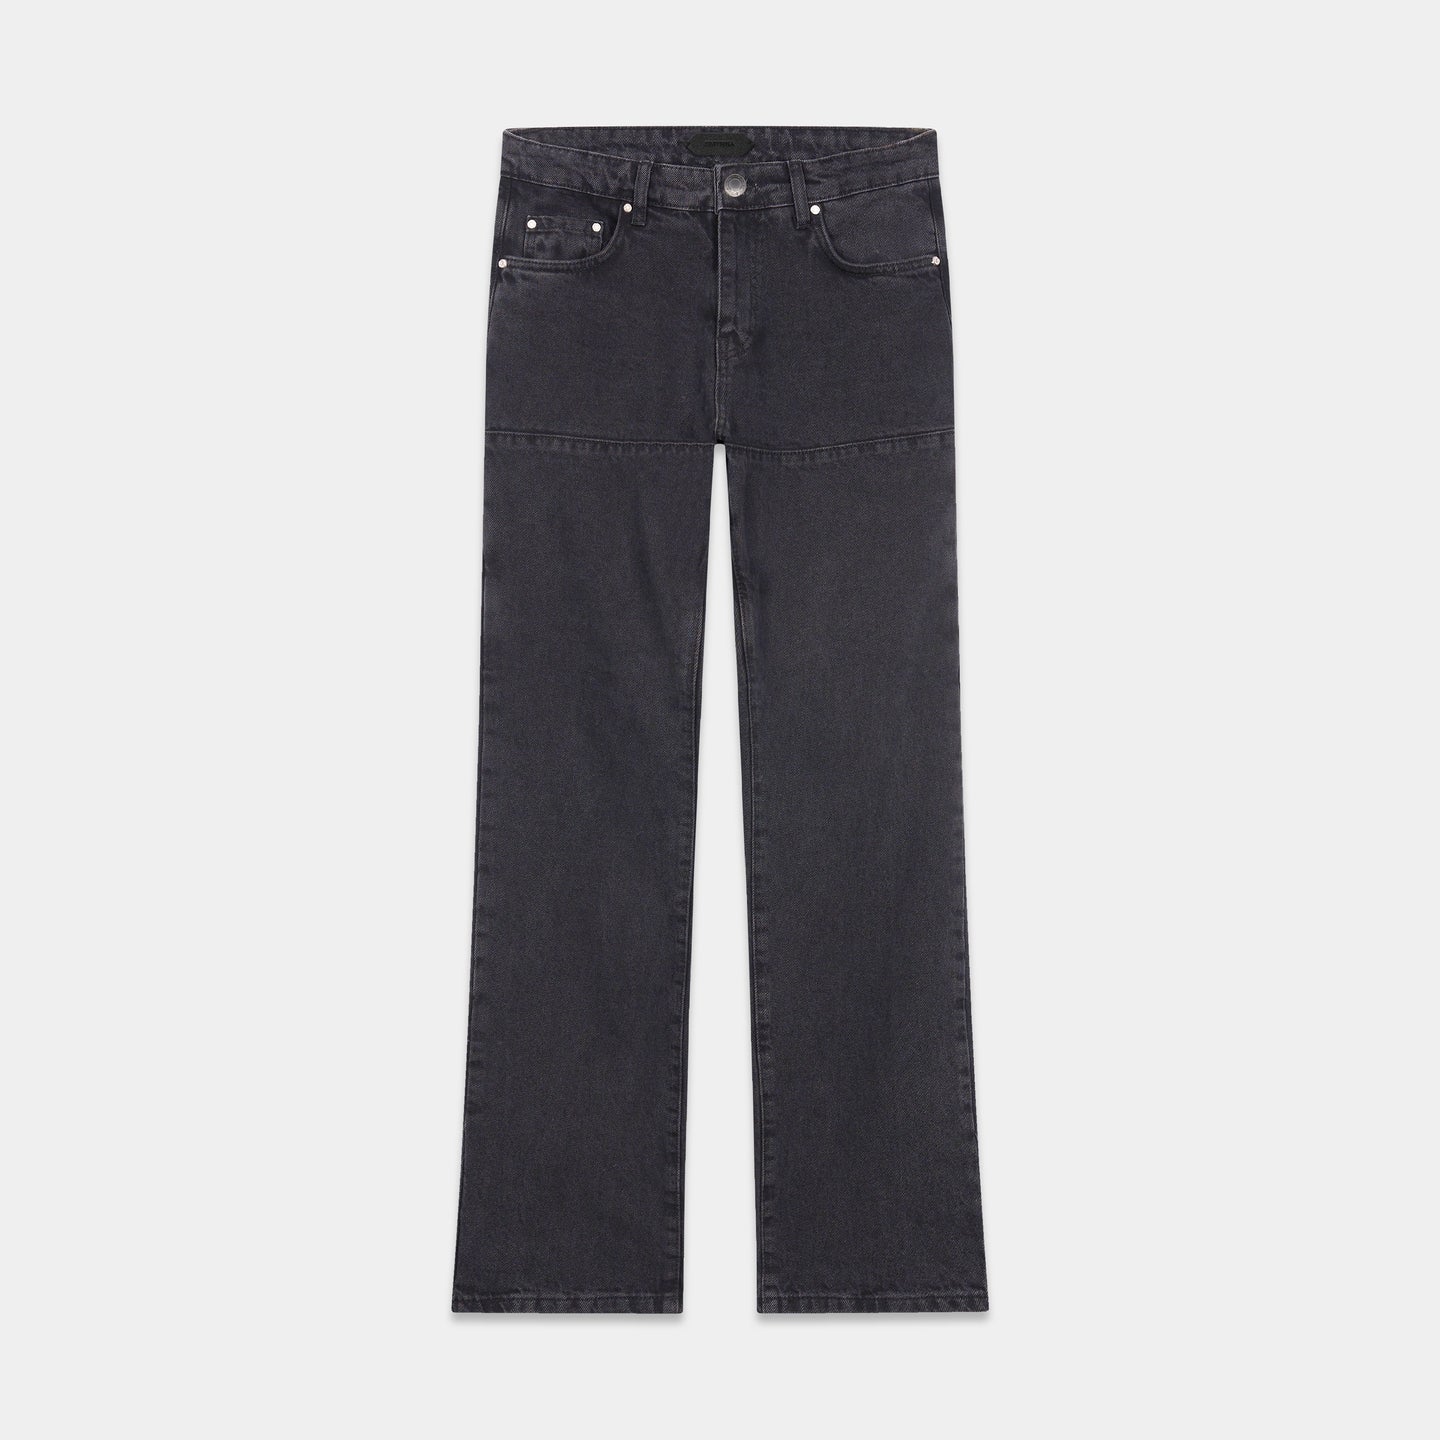 SMYRNAWorker jeans in grey - Jeans